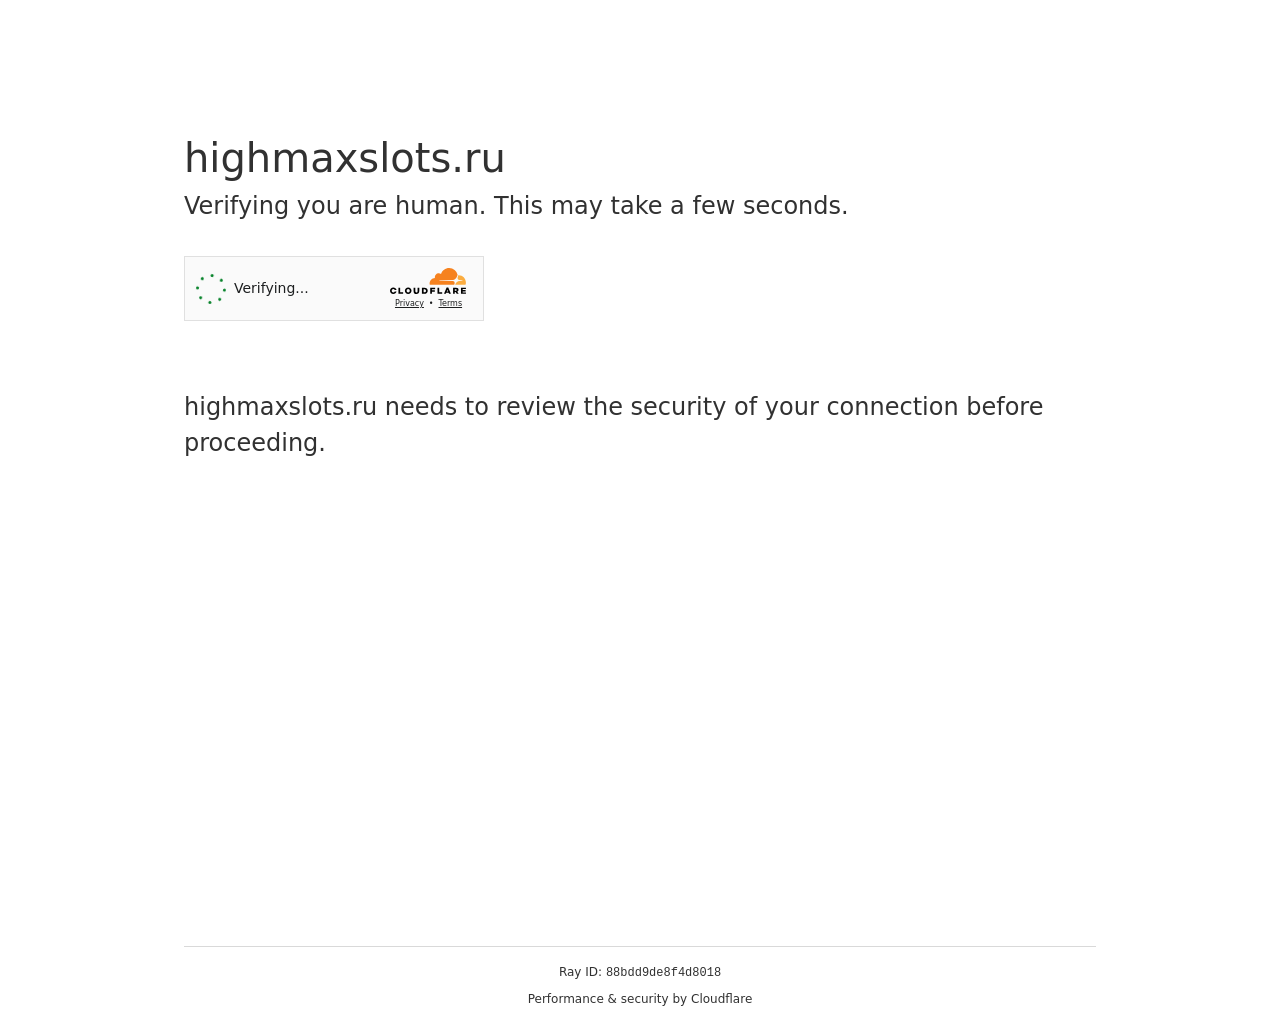 highmaxslots.ru